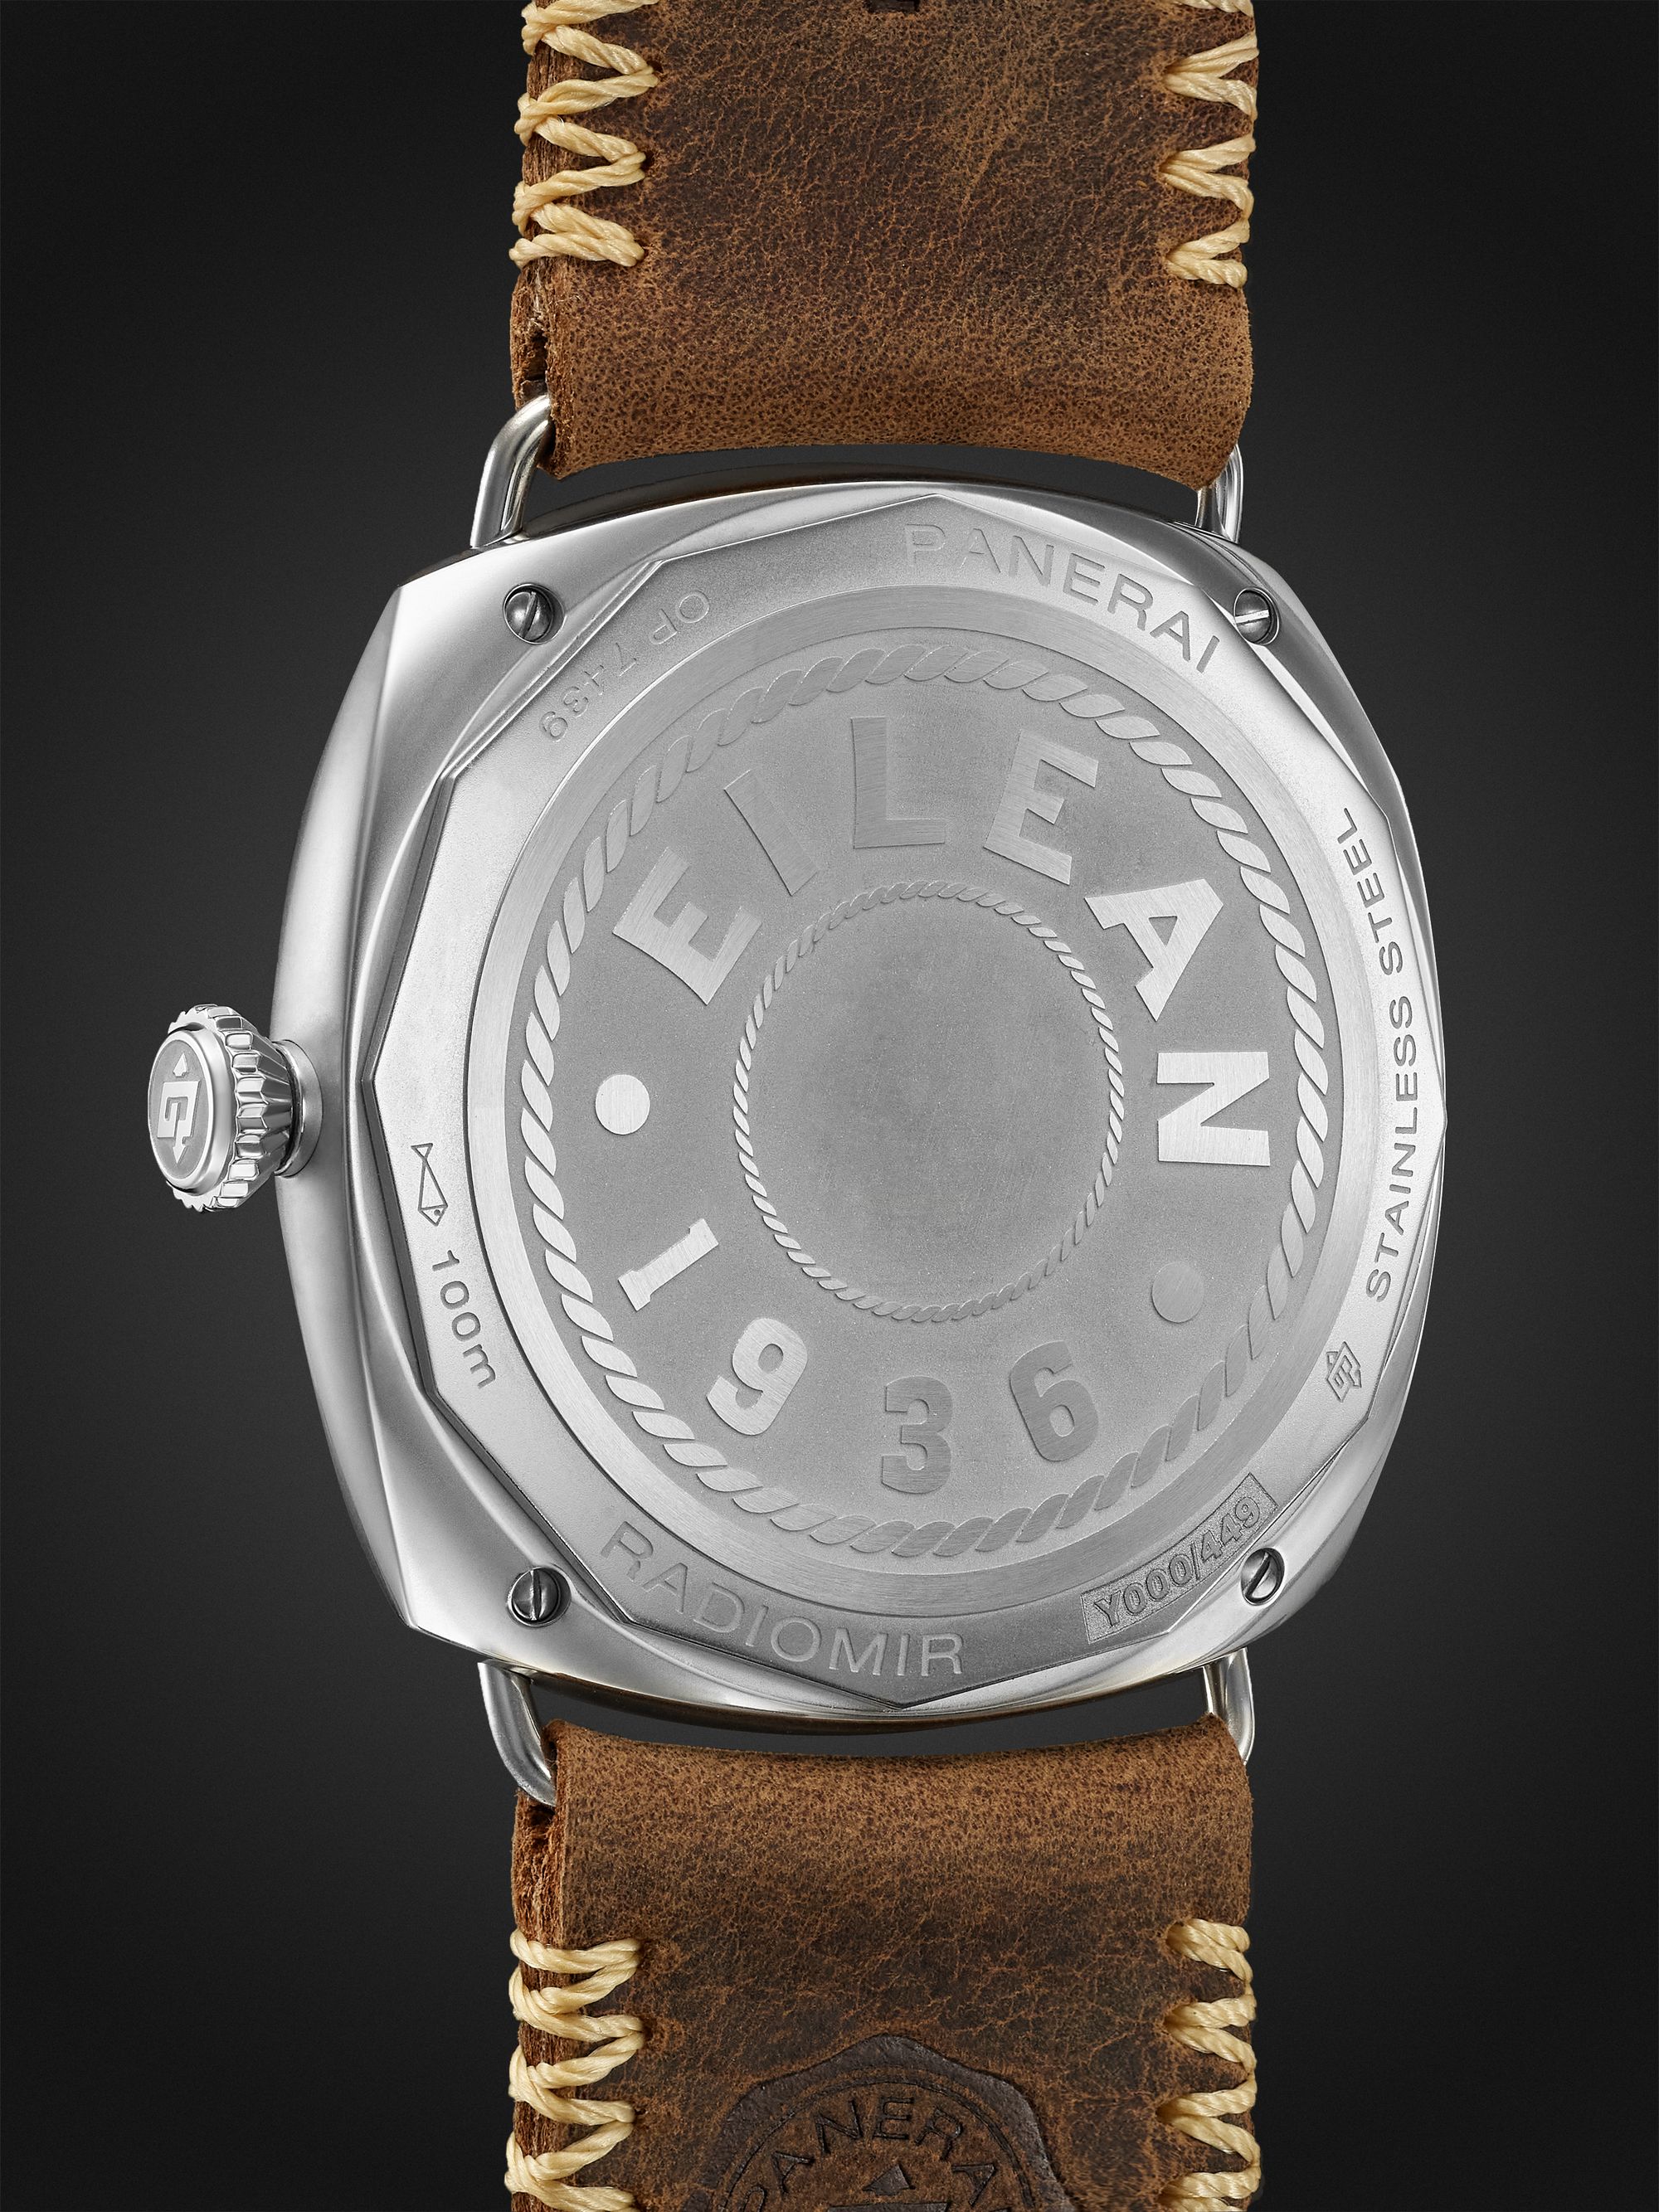 PANERAI Radionir Eilean Limited Edition Hand-Wound 45mm Stainless Steel and Leather Watch, Ref. No. PAM1243